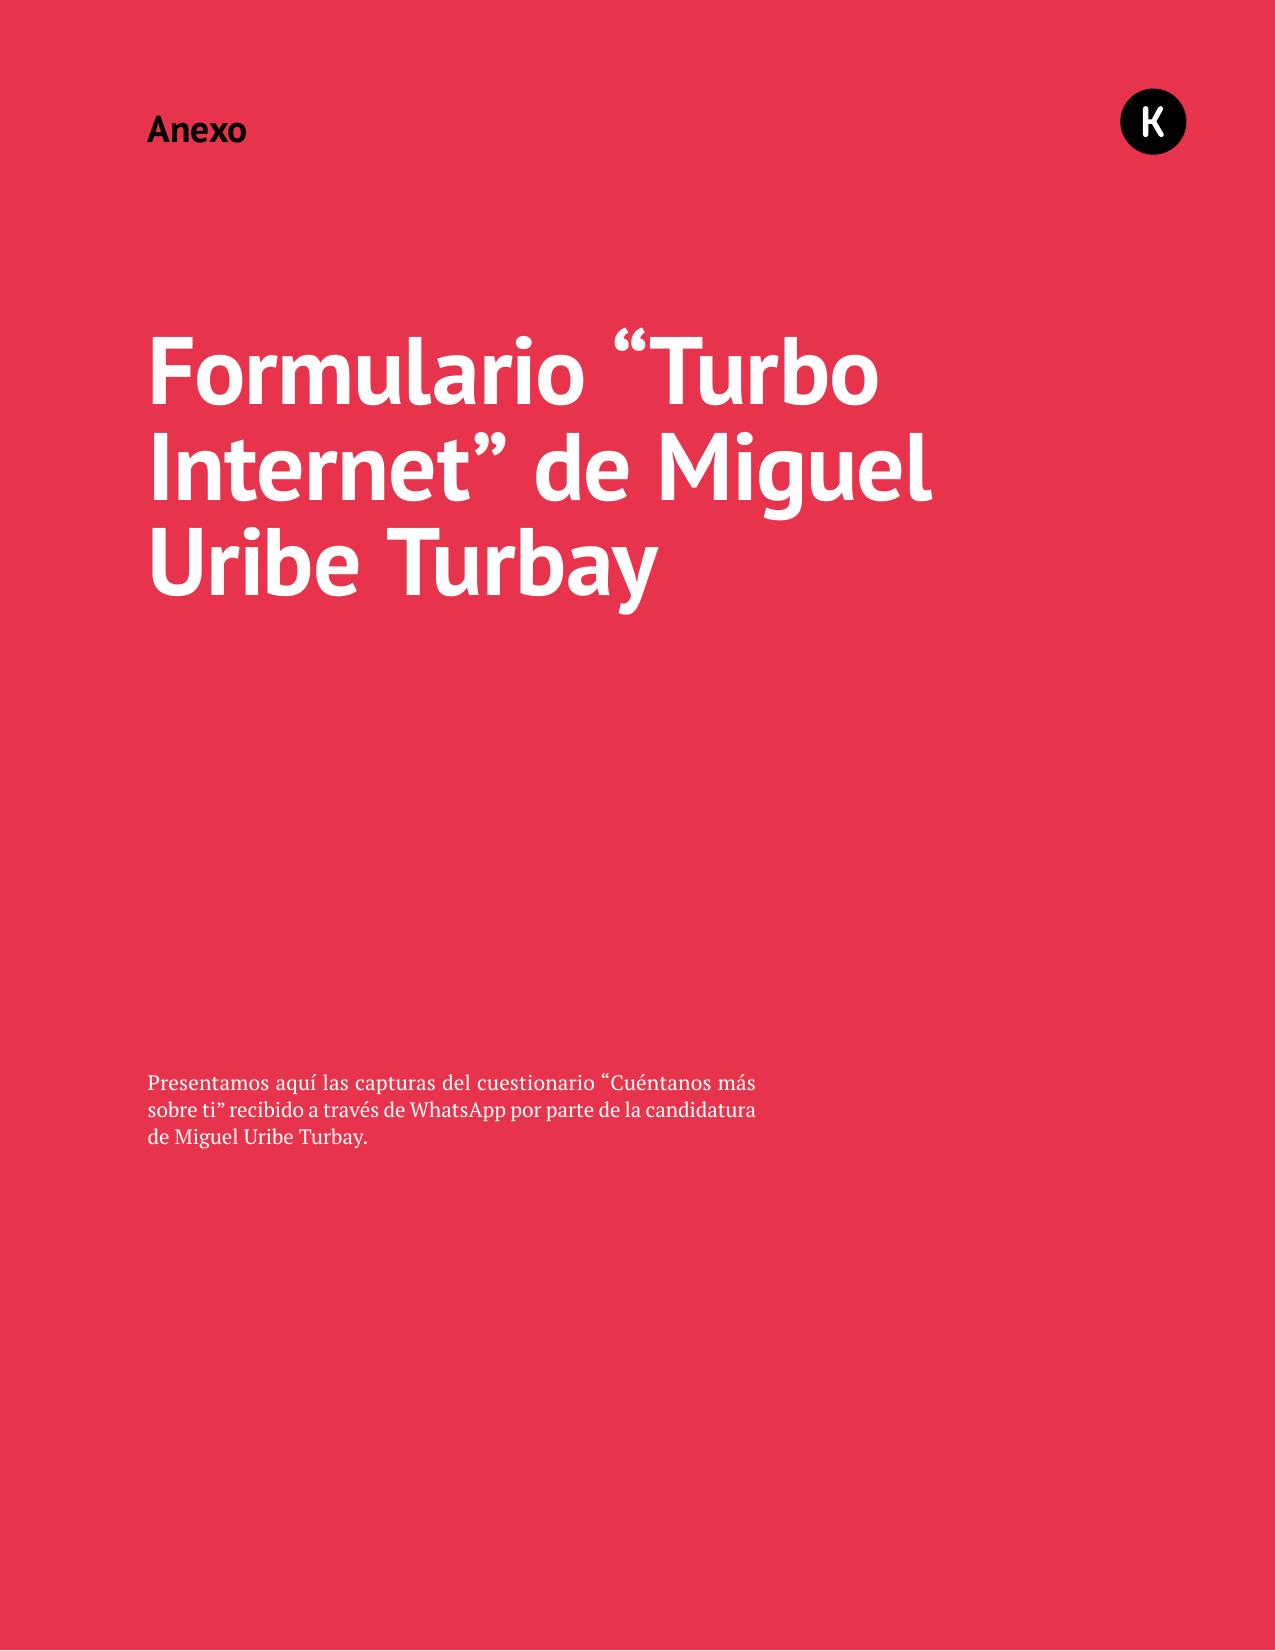 Anexo 09 - Formulario Turbo Internet de Miguel Uribe Turbay